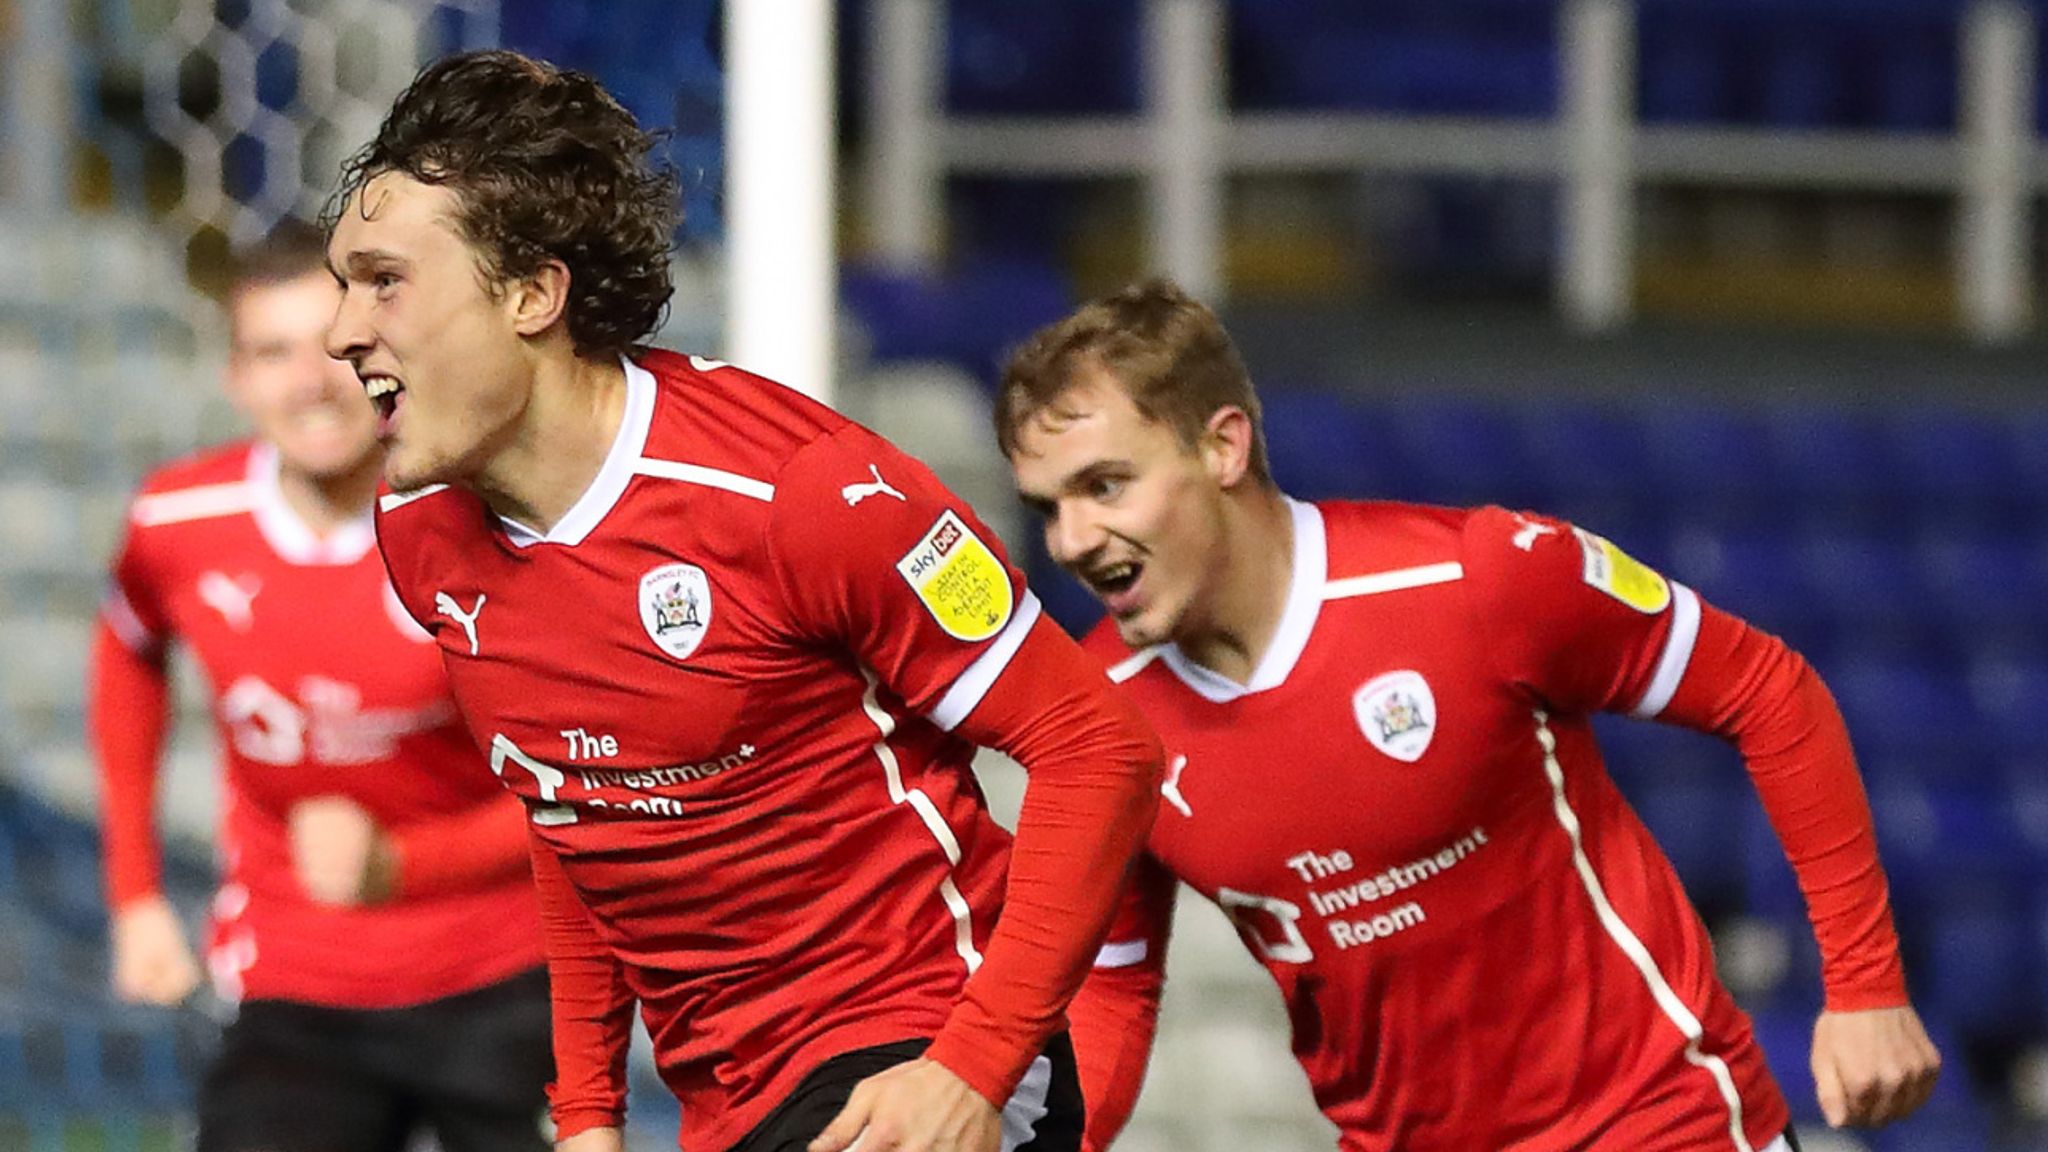 U21 Match Report, Cardiff City 2-1 Barnsley